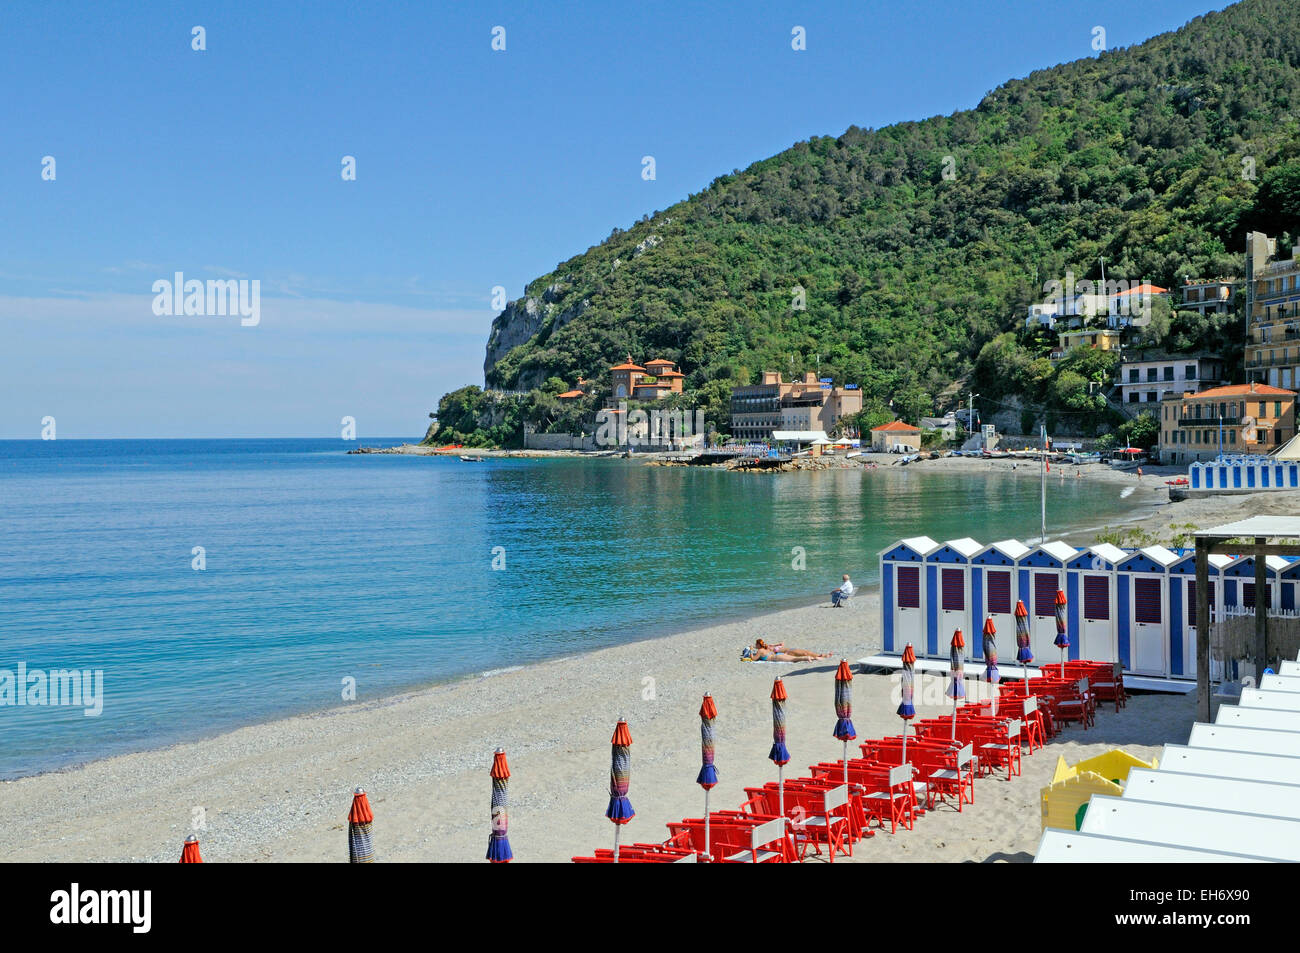 A view on the beach of Capo Noli, Italy Stock Photo - Alamy